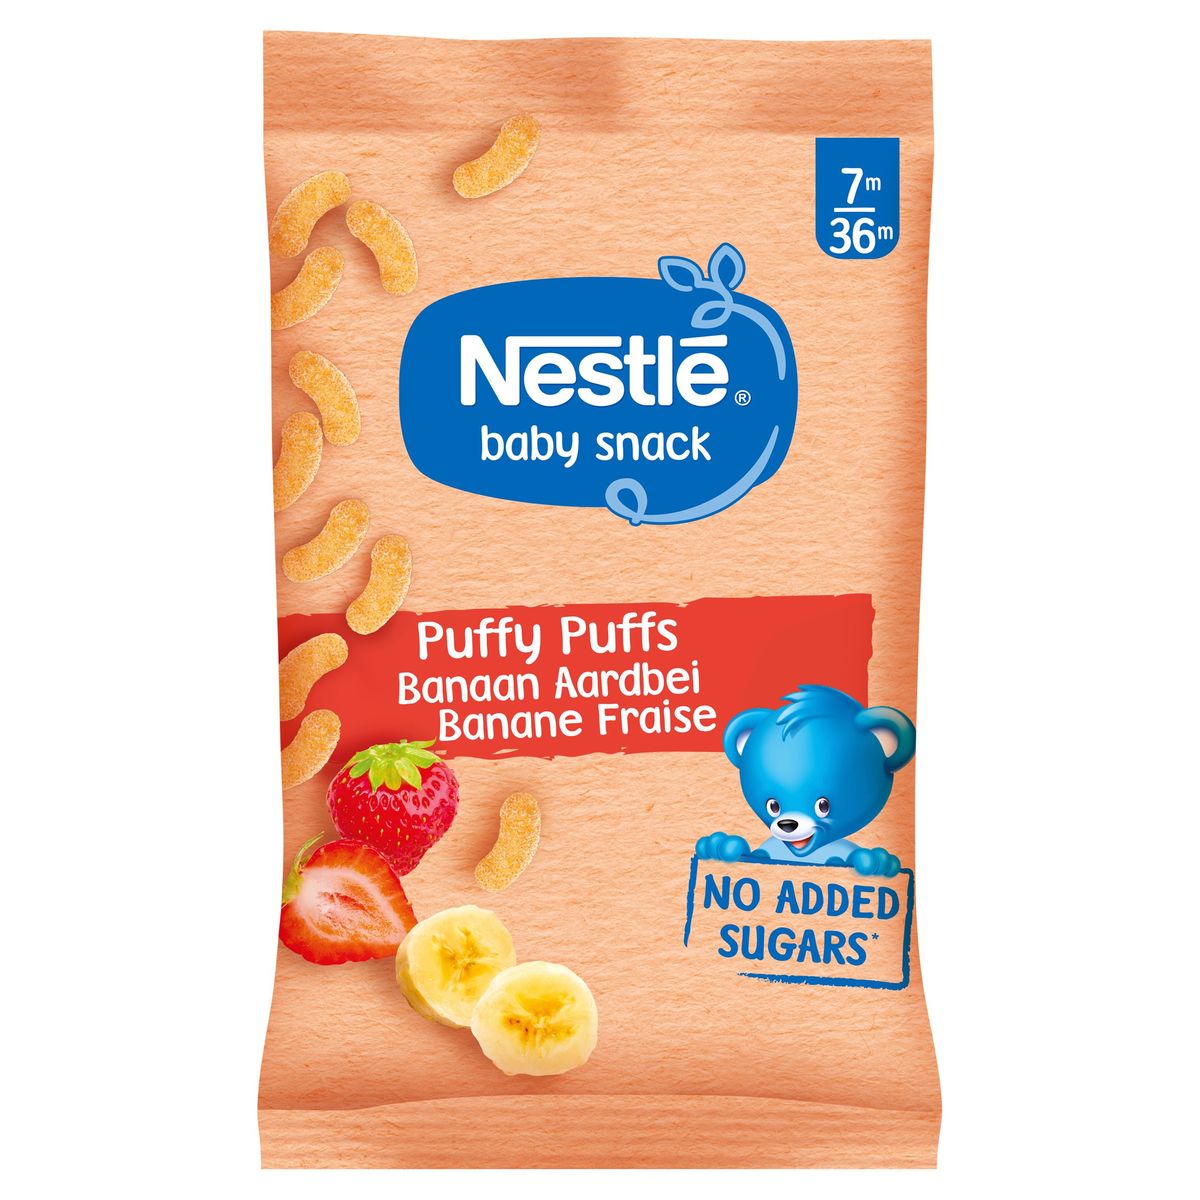 Nestlé Baby Snack Puffy Puffs Banane Fraise dès 7mois (28g)